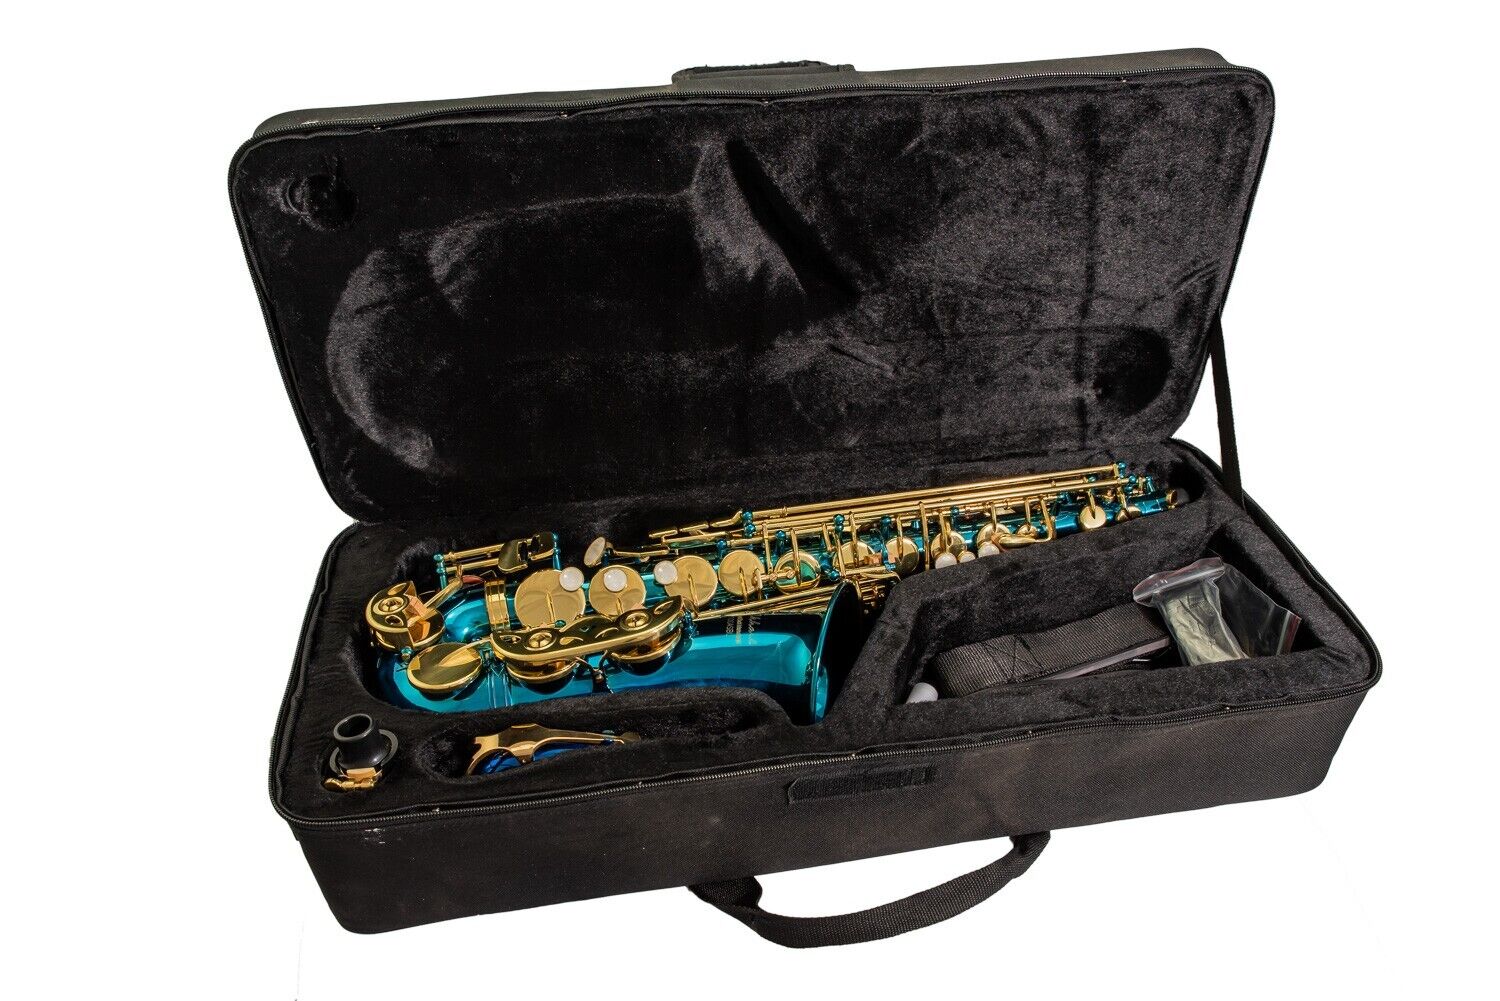 Elkhart Vincent Bach Deluxe E Flat Blue Alto Saxophone Pack | High F# key -